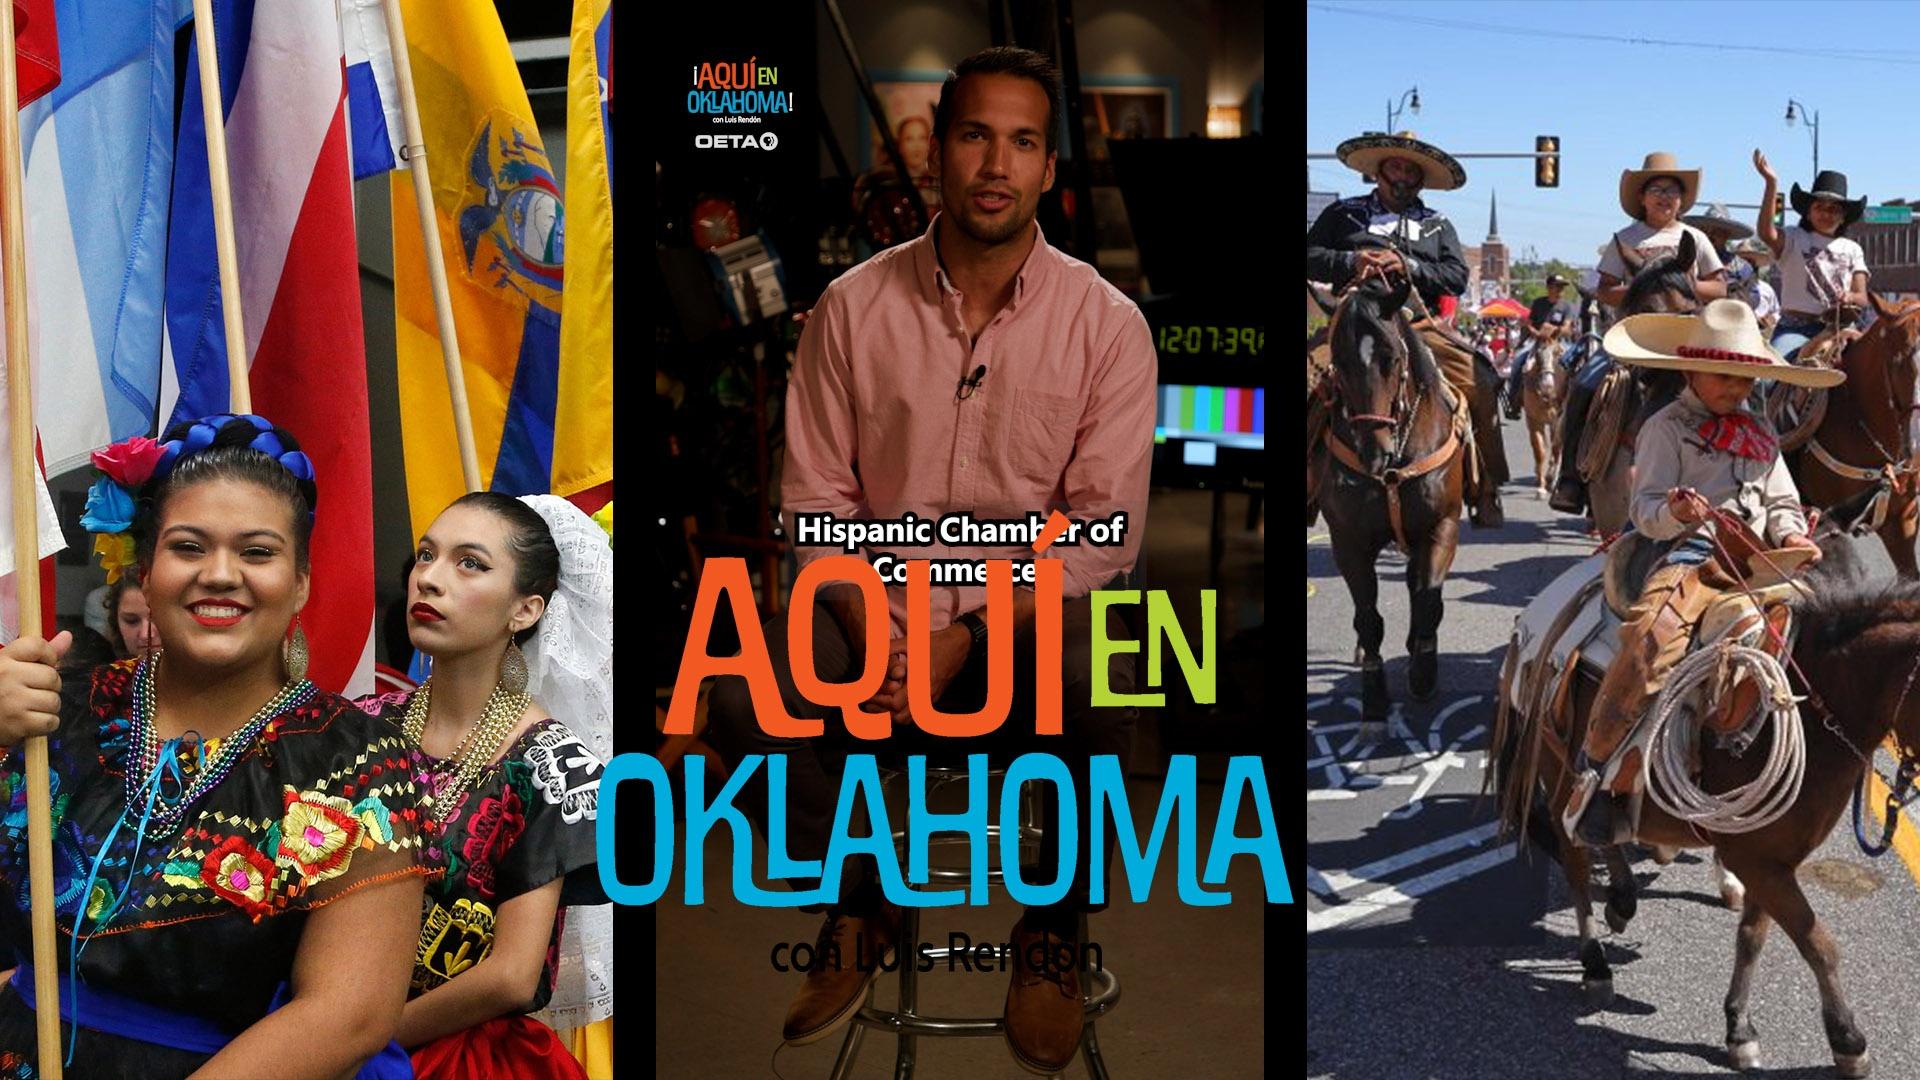 Hispanic Growth in Oklahoma - An Emerging Economic Power